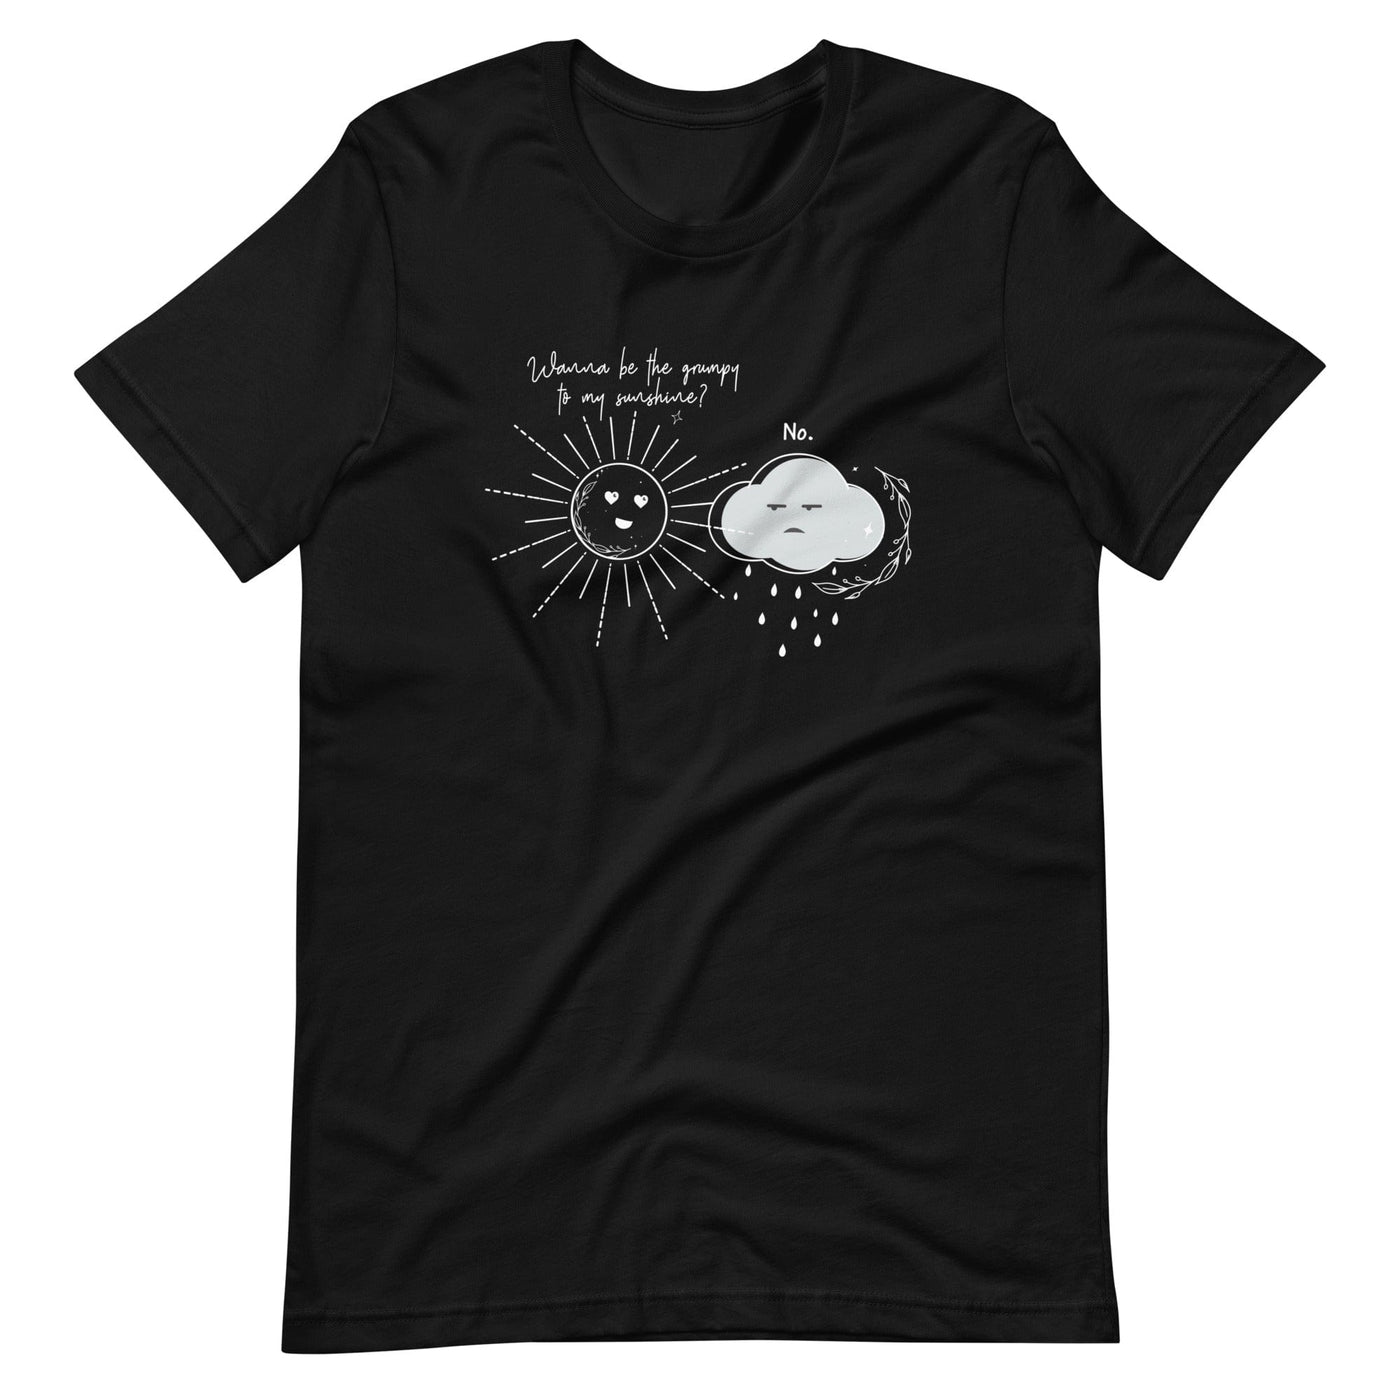 Lit Haven Booktique T-Shirt Black / XS Grumpy Cloud tee